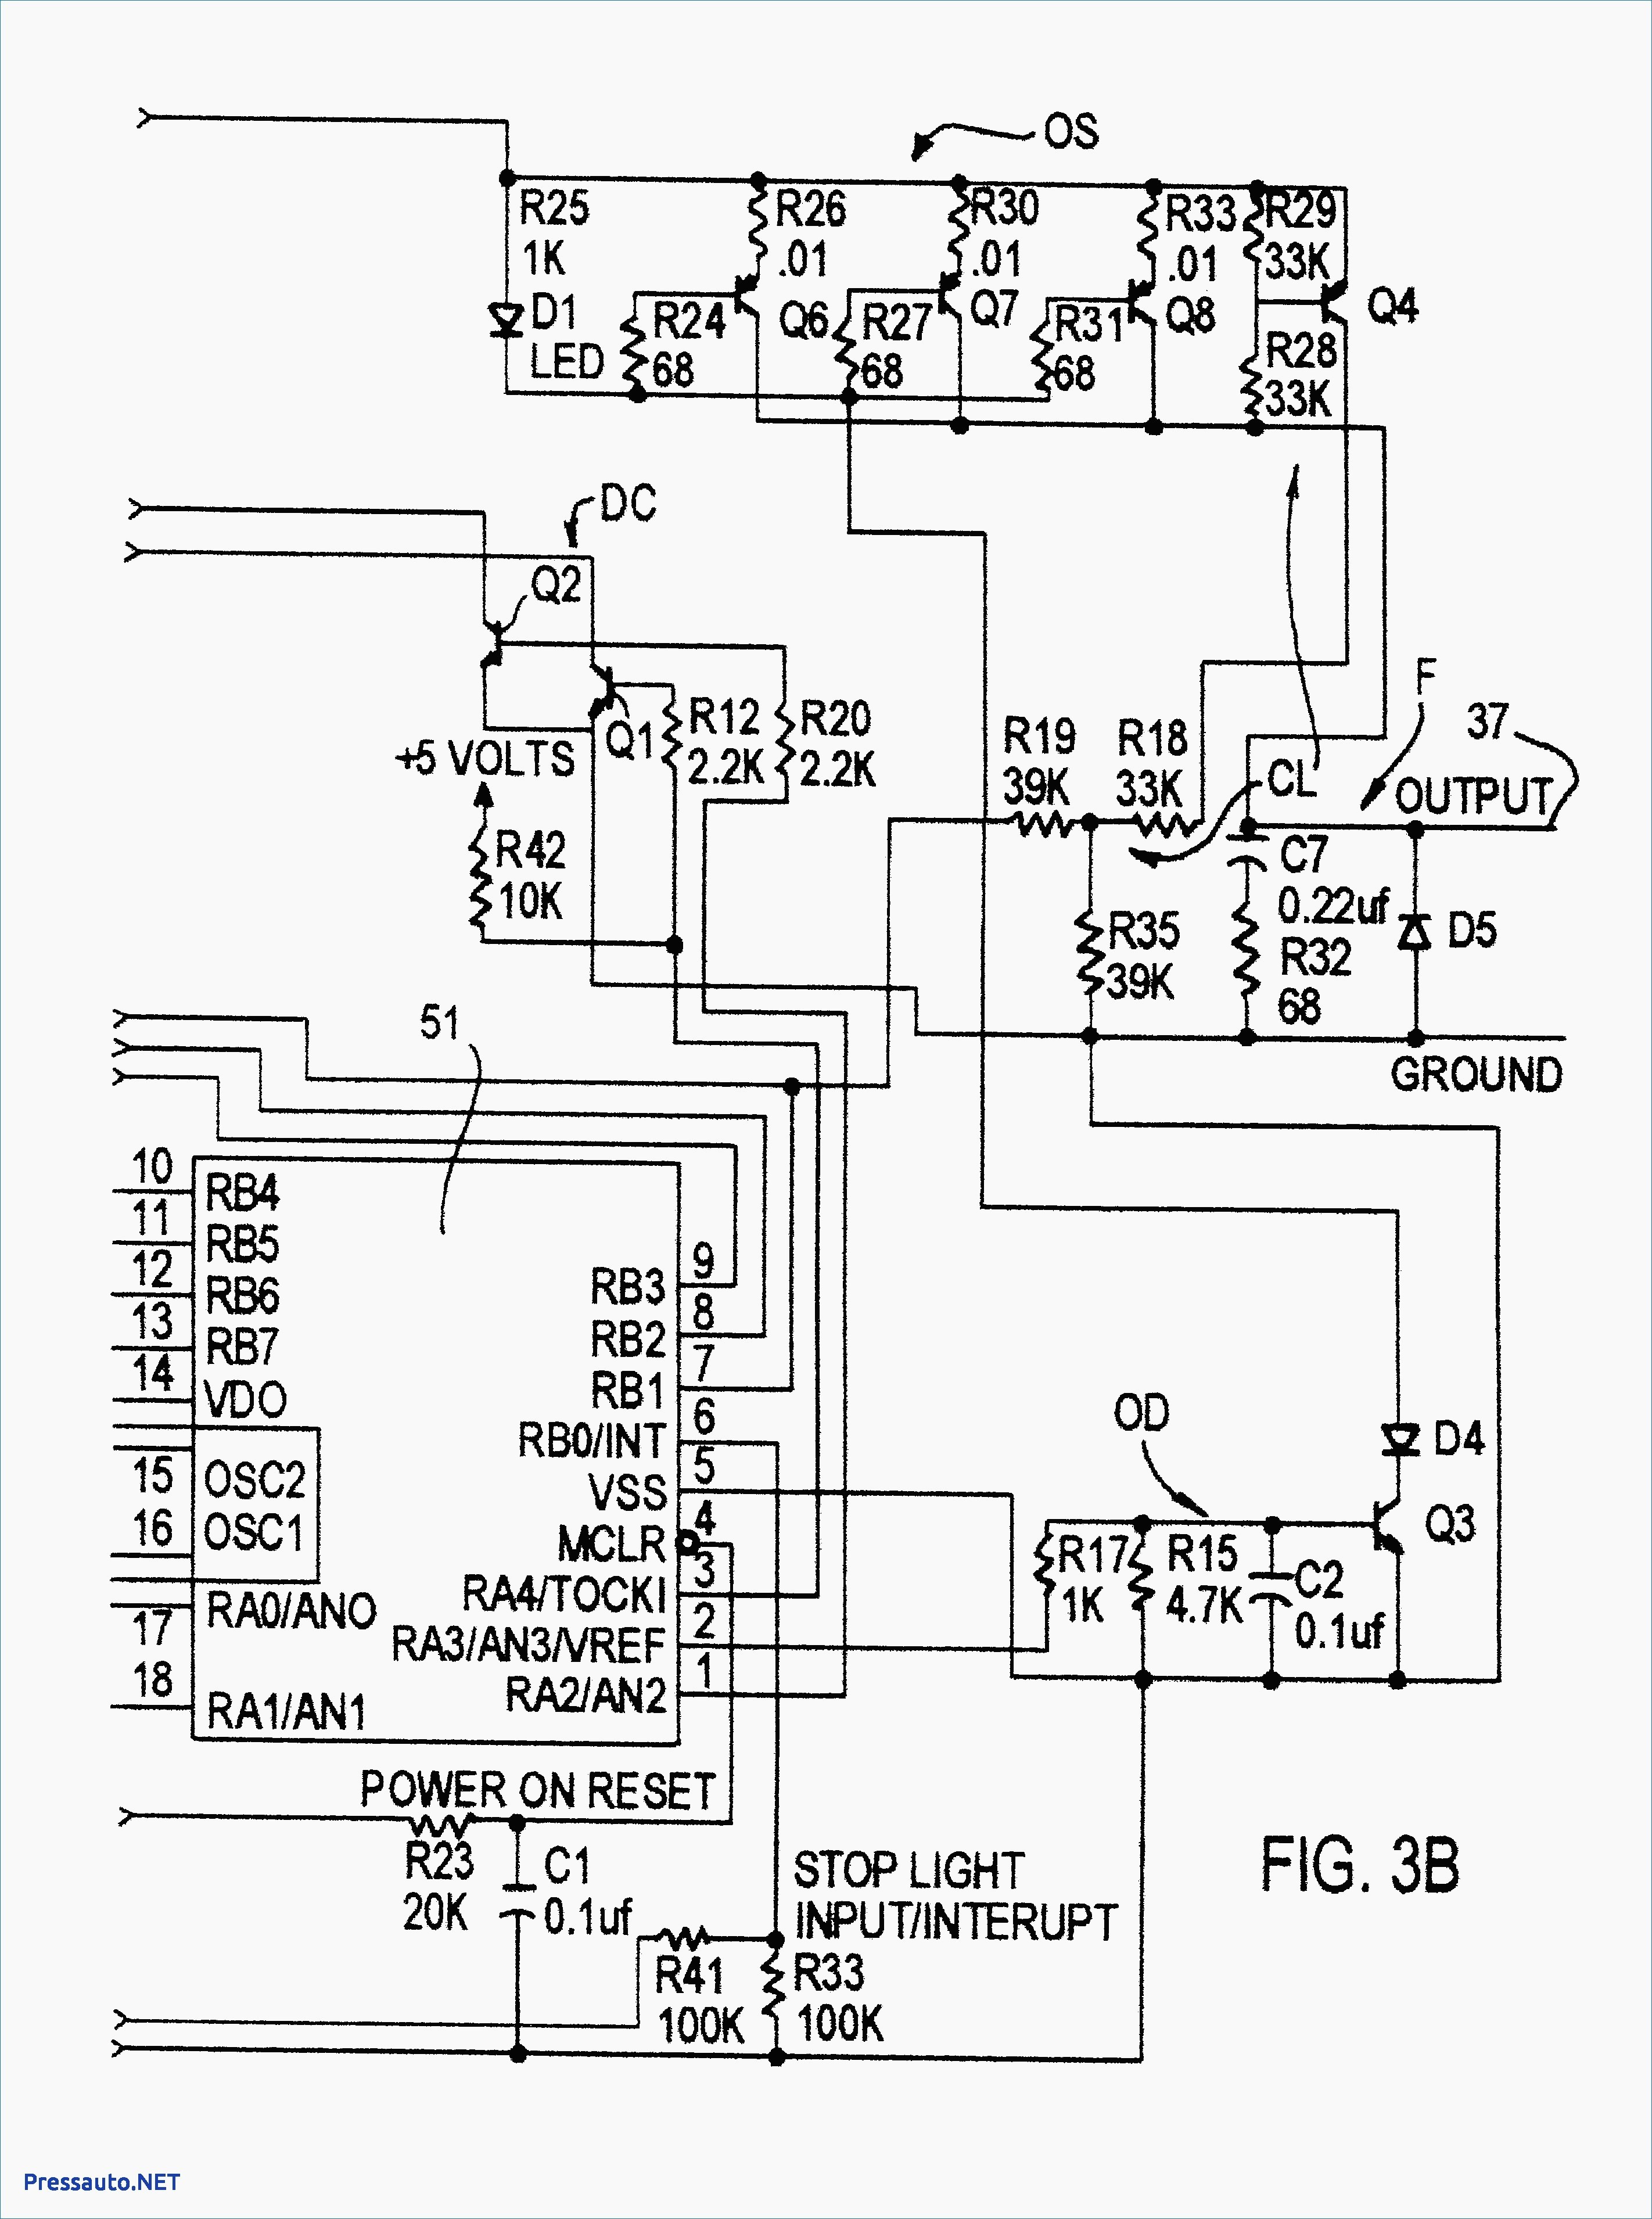 Sew Motor Wiring Diagram Auto Diagrams Instructions Ac Gear Motor Wiring Diagram Fresh Leeson New